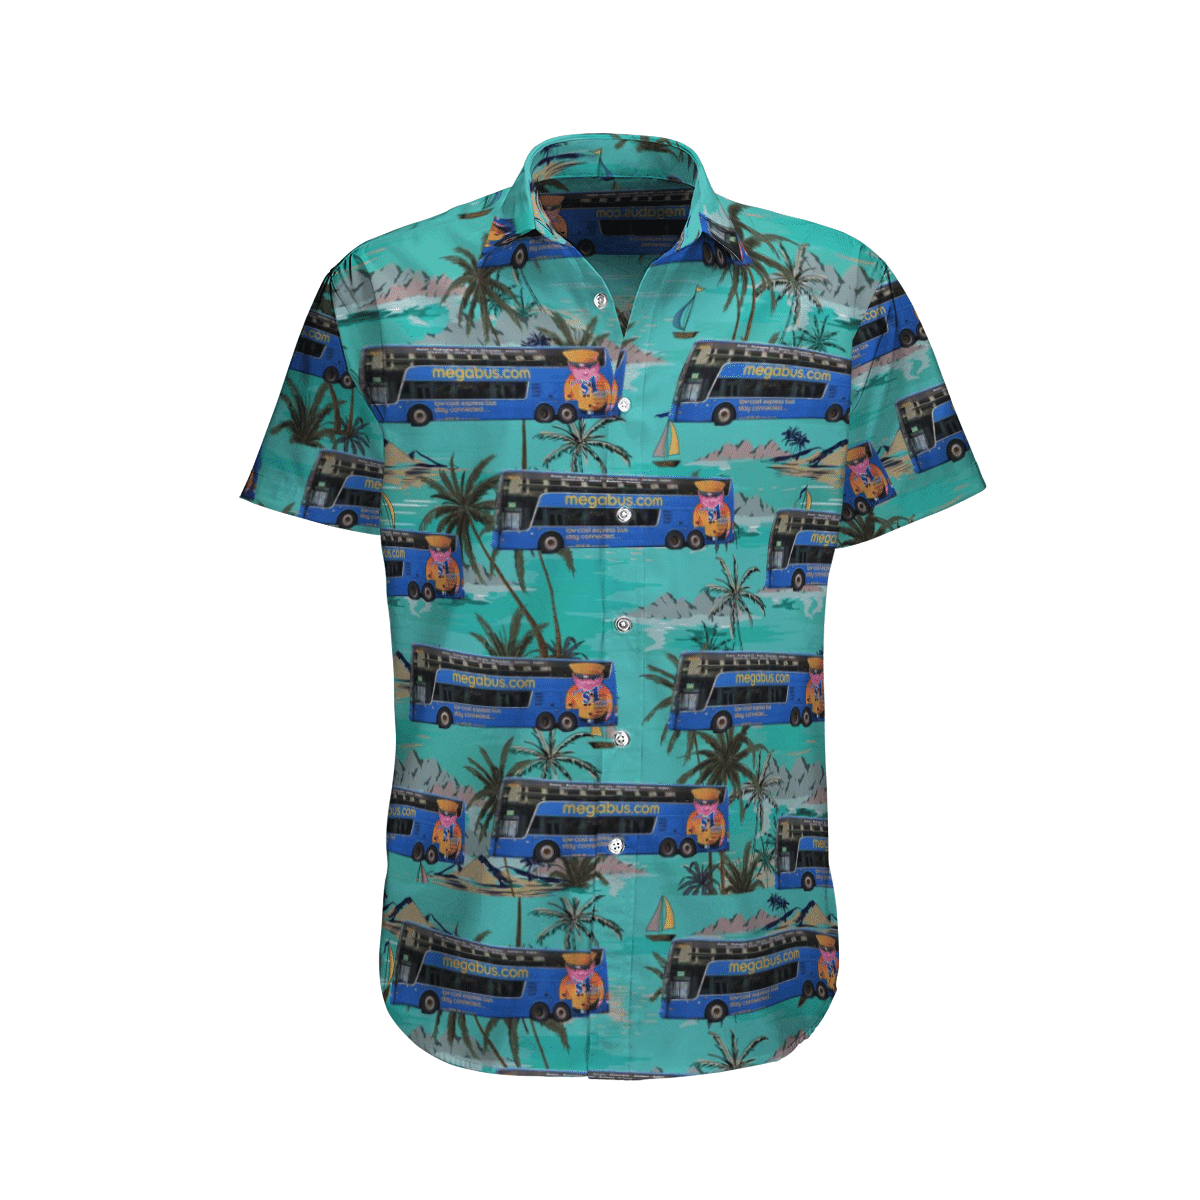 Enjoy your summer with top cool hawaiian shirt below 80